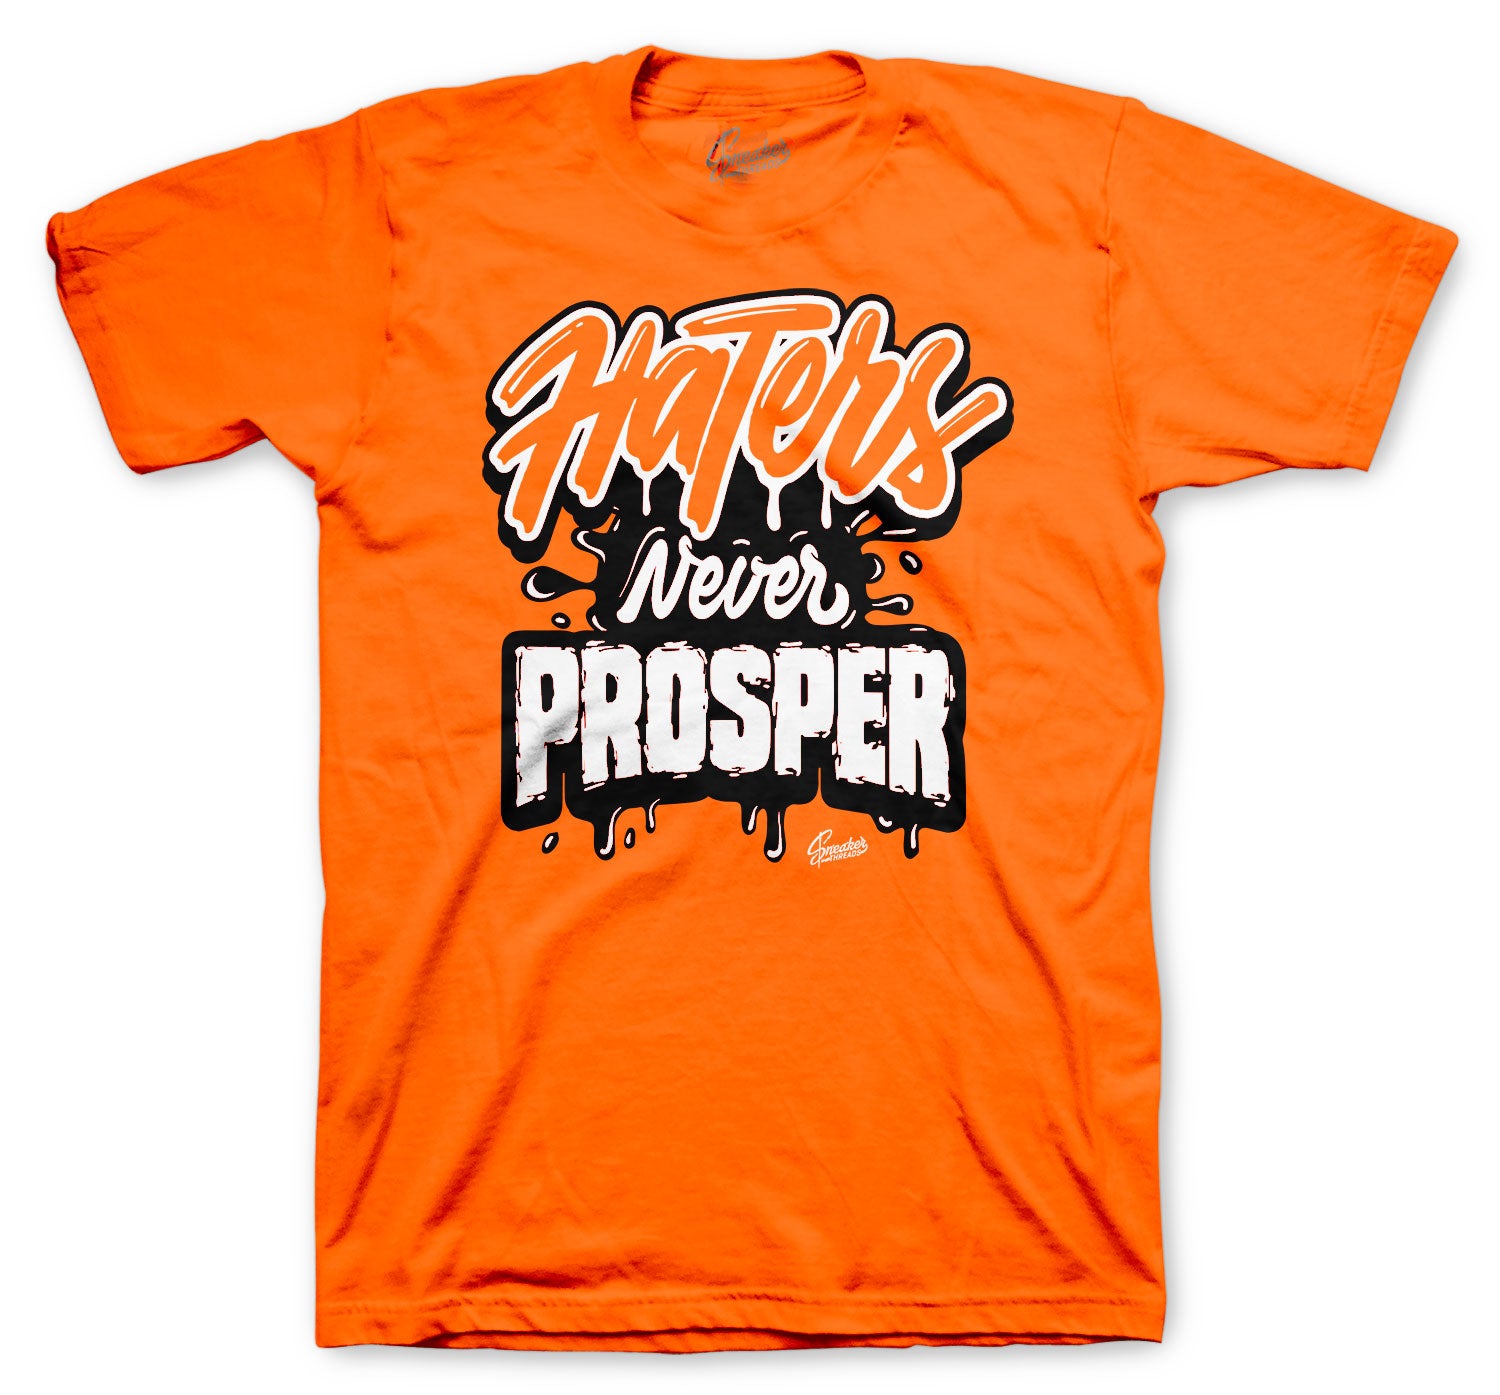 Retro 5 Orange Blaze Shirt - Never Prosper - Orange